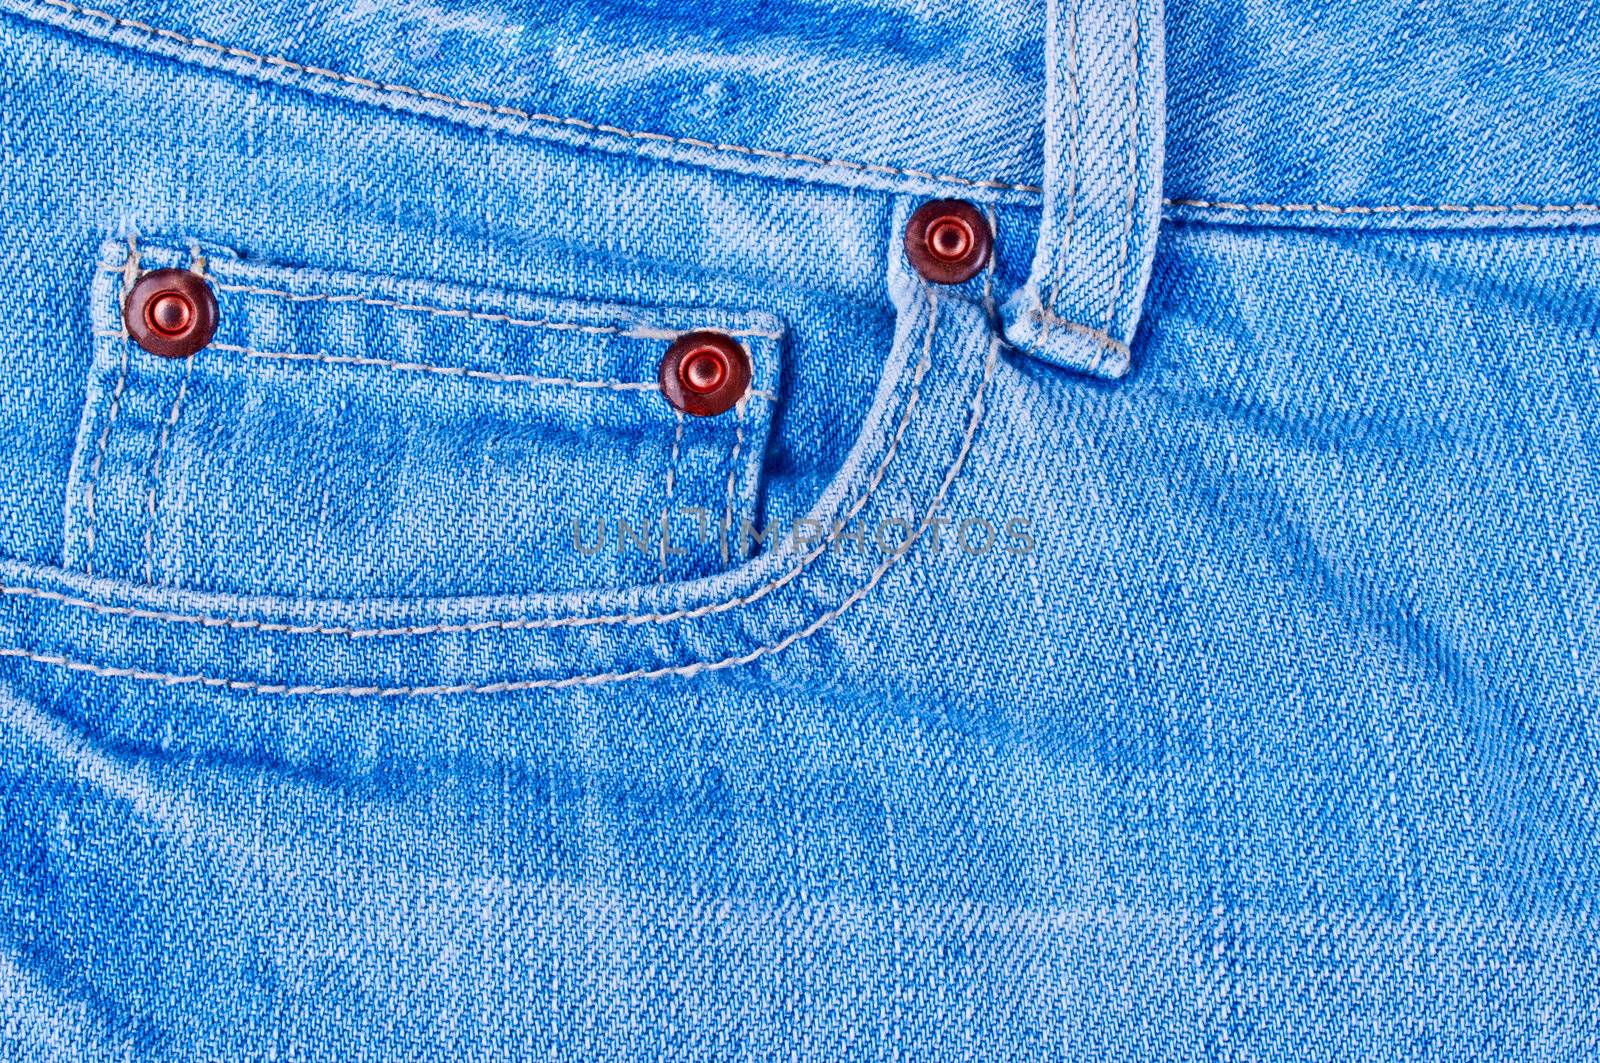 Pocket denim pants close up